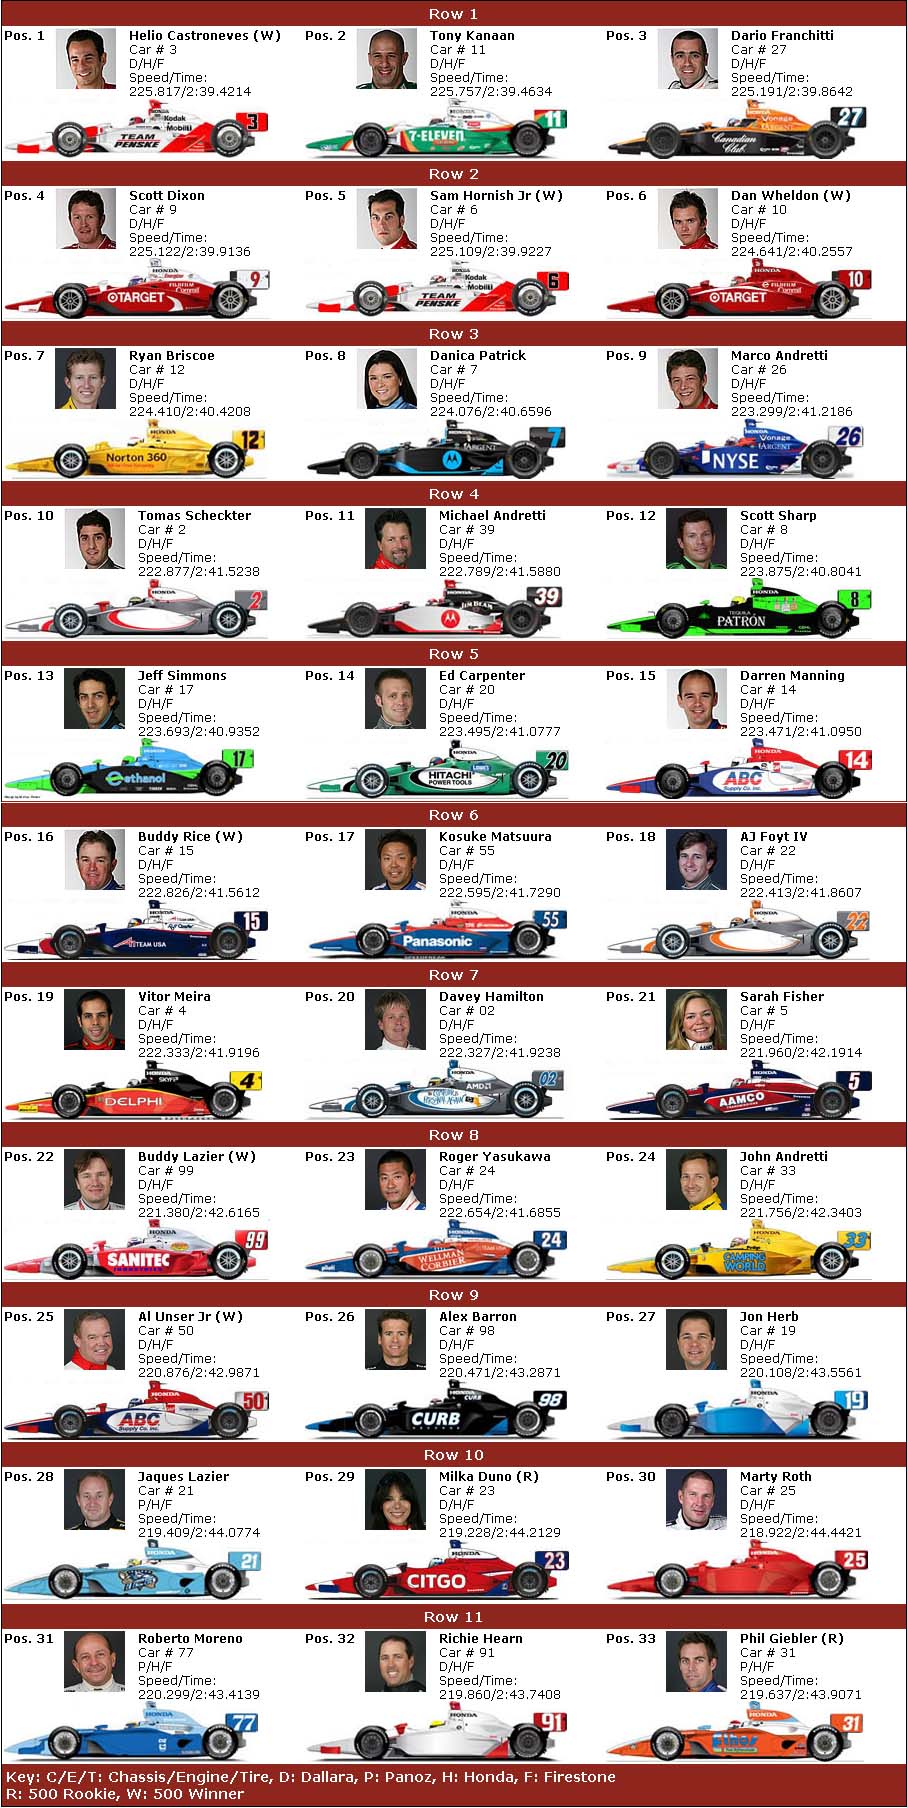 2007 Indy 500 Starting Grid